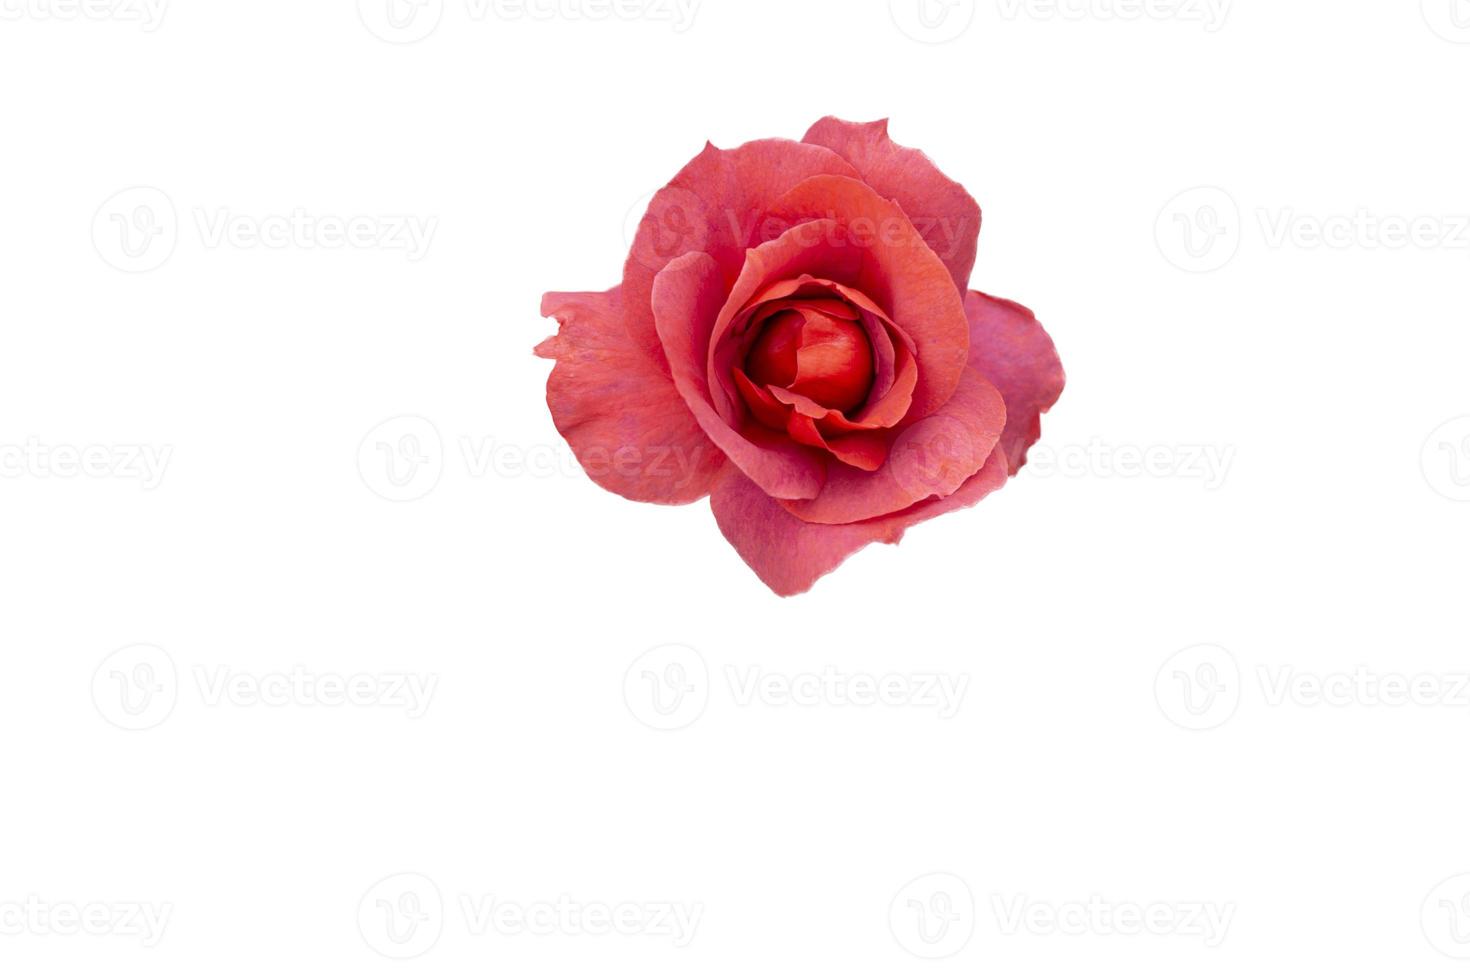 sola rosa roja sobre fondo blanco. foto